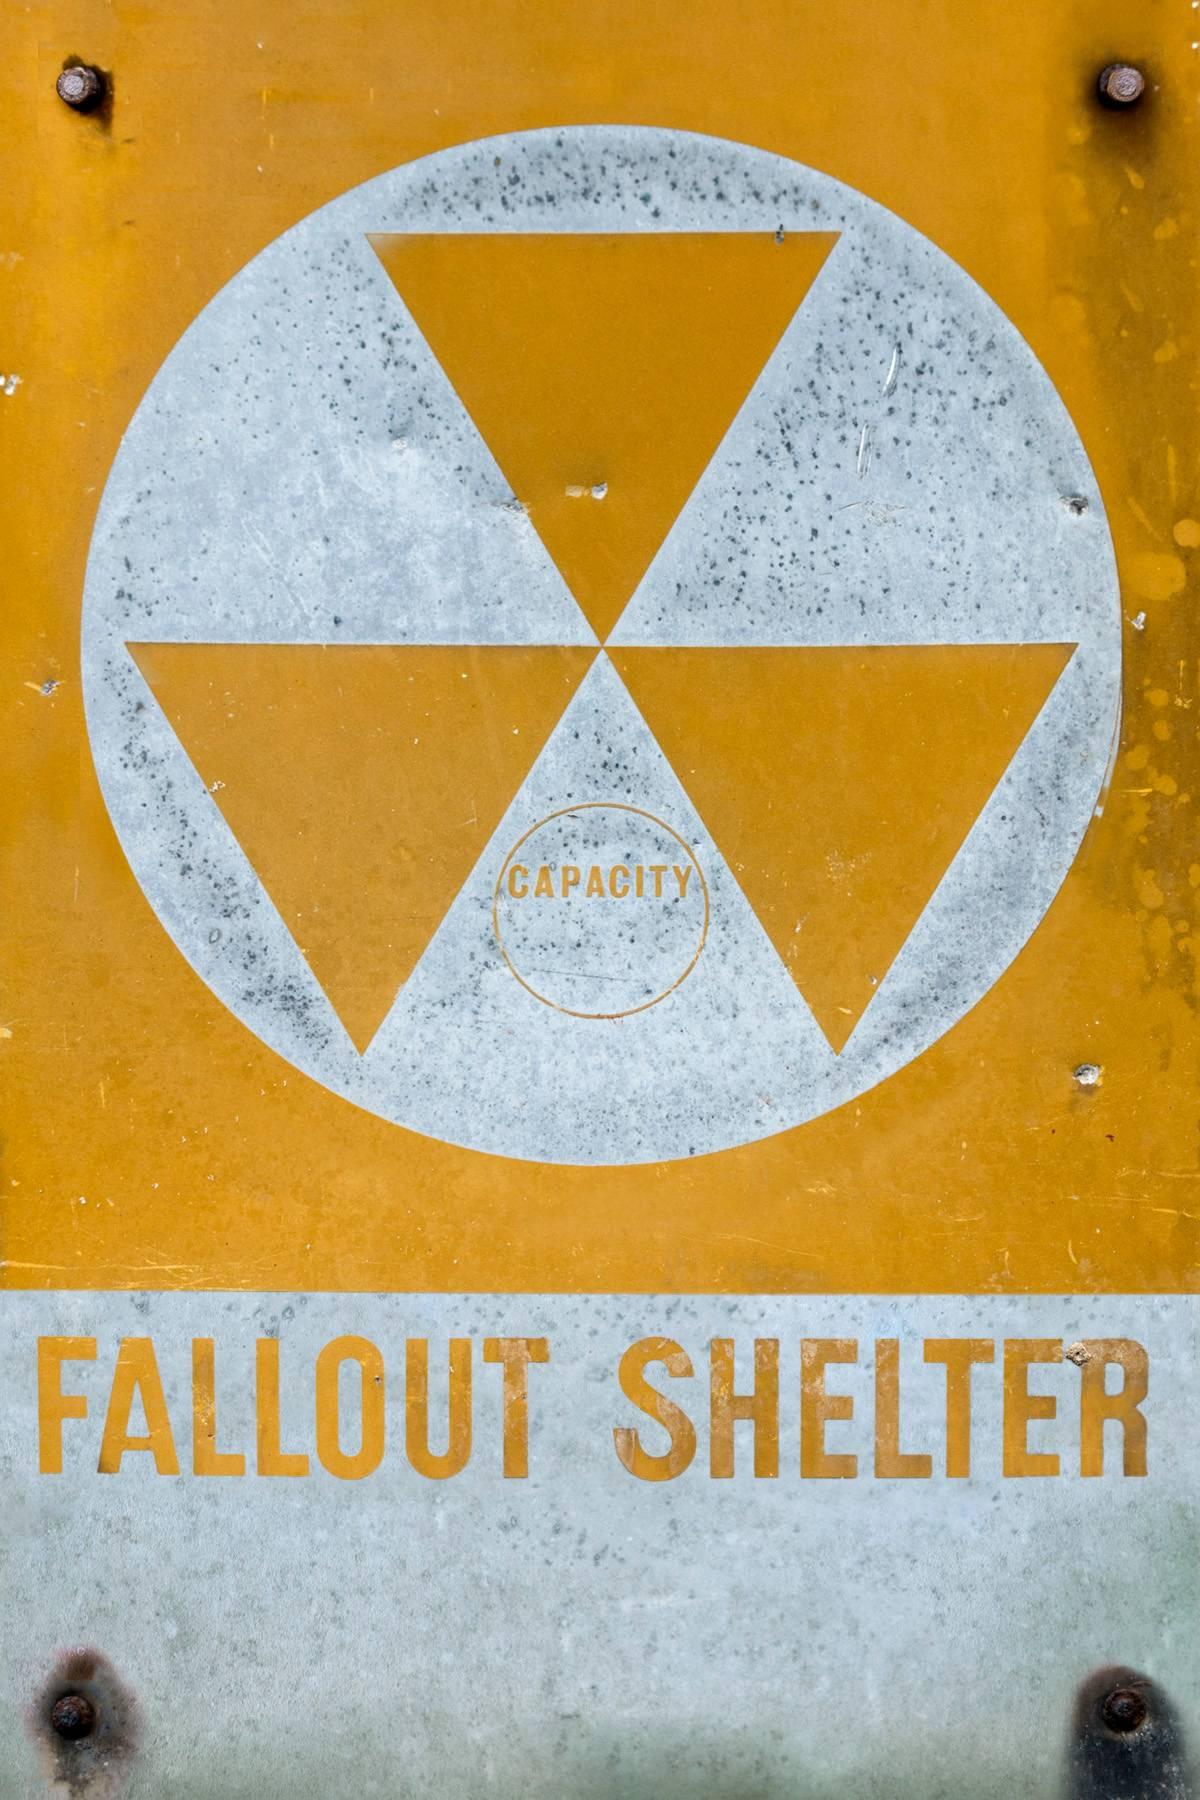 Phillip Buehler Color Photograph - Fallout Shelter, archival dye-sub print on aluminum